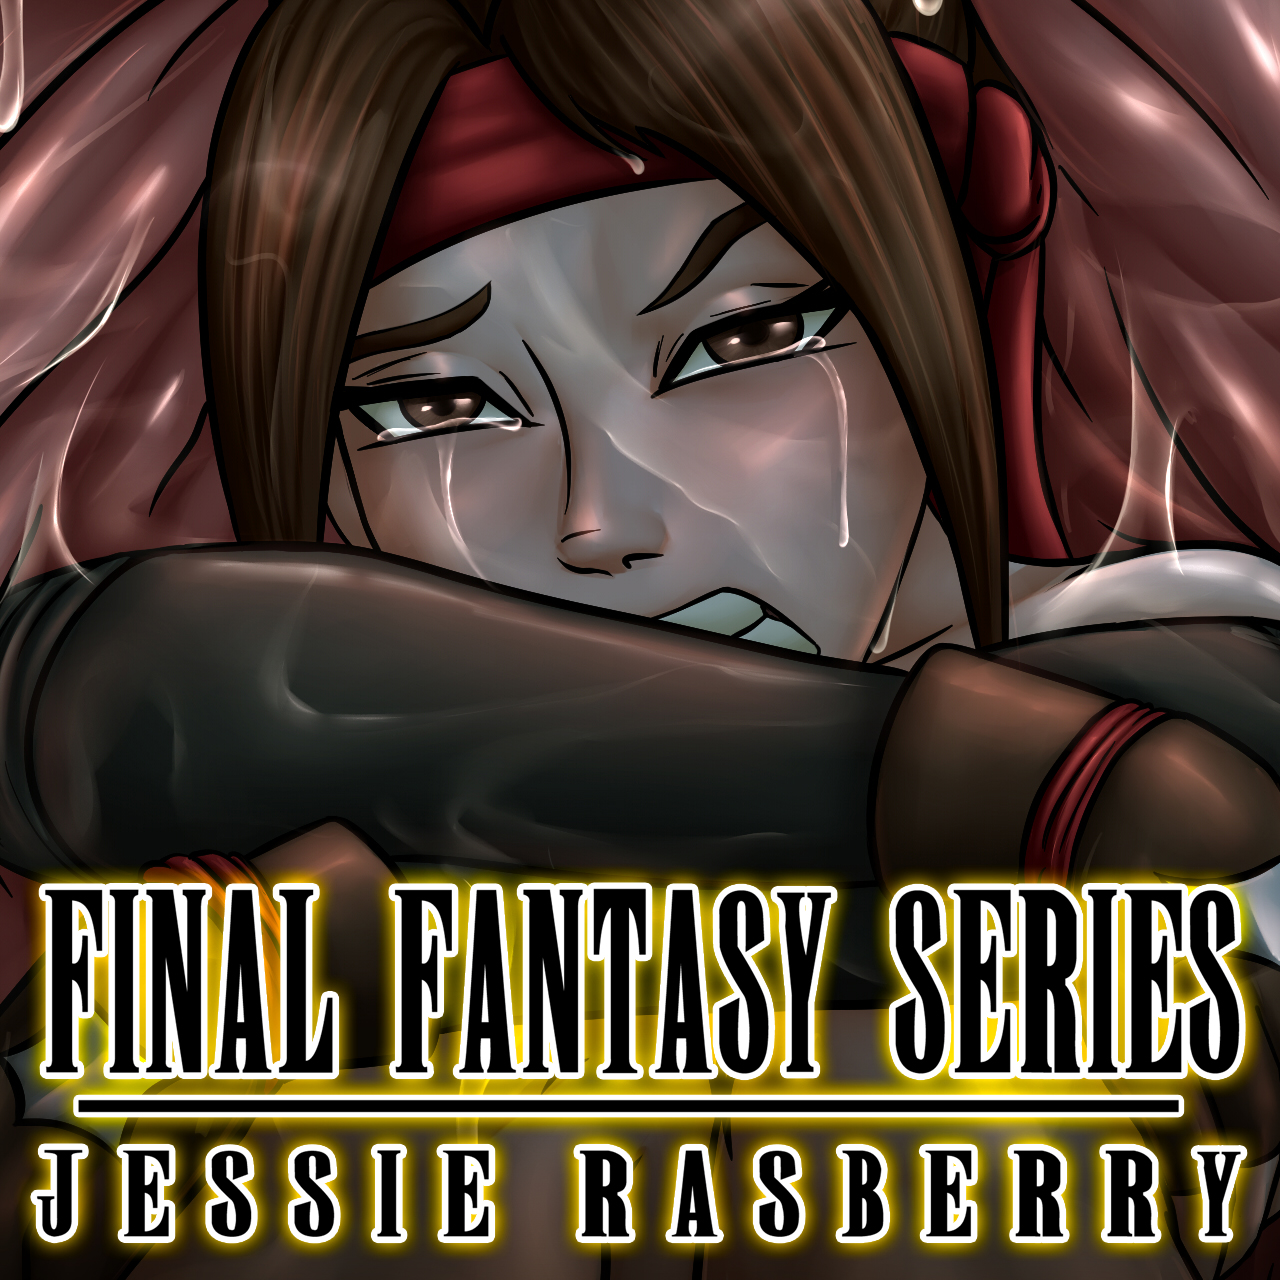 Final Fantasy Series: Jessie Rasberry